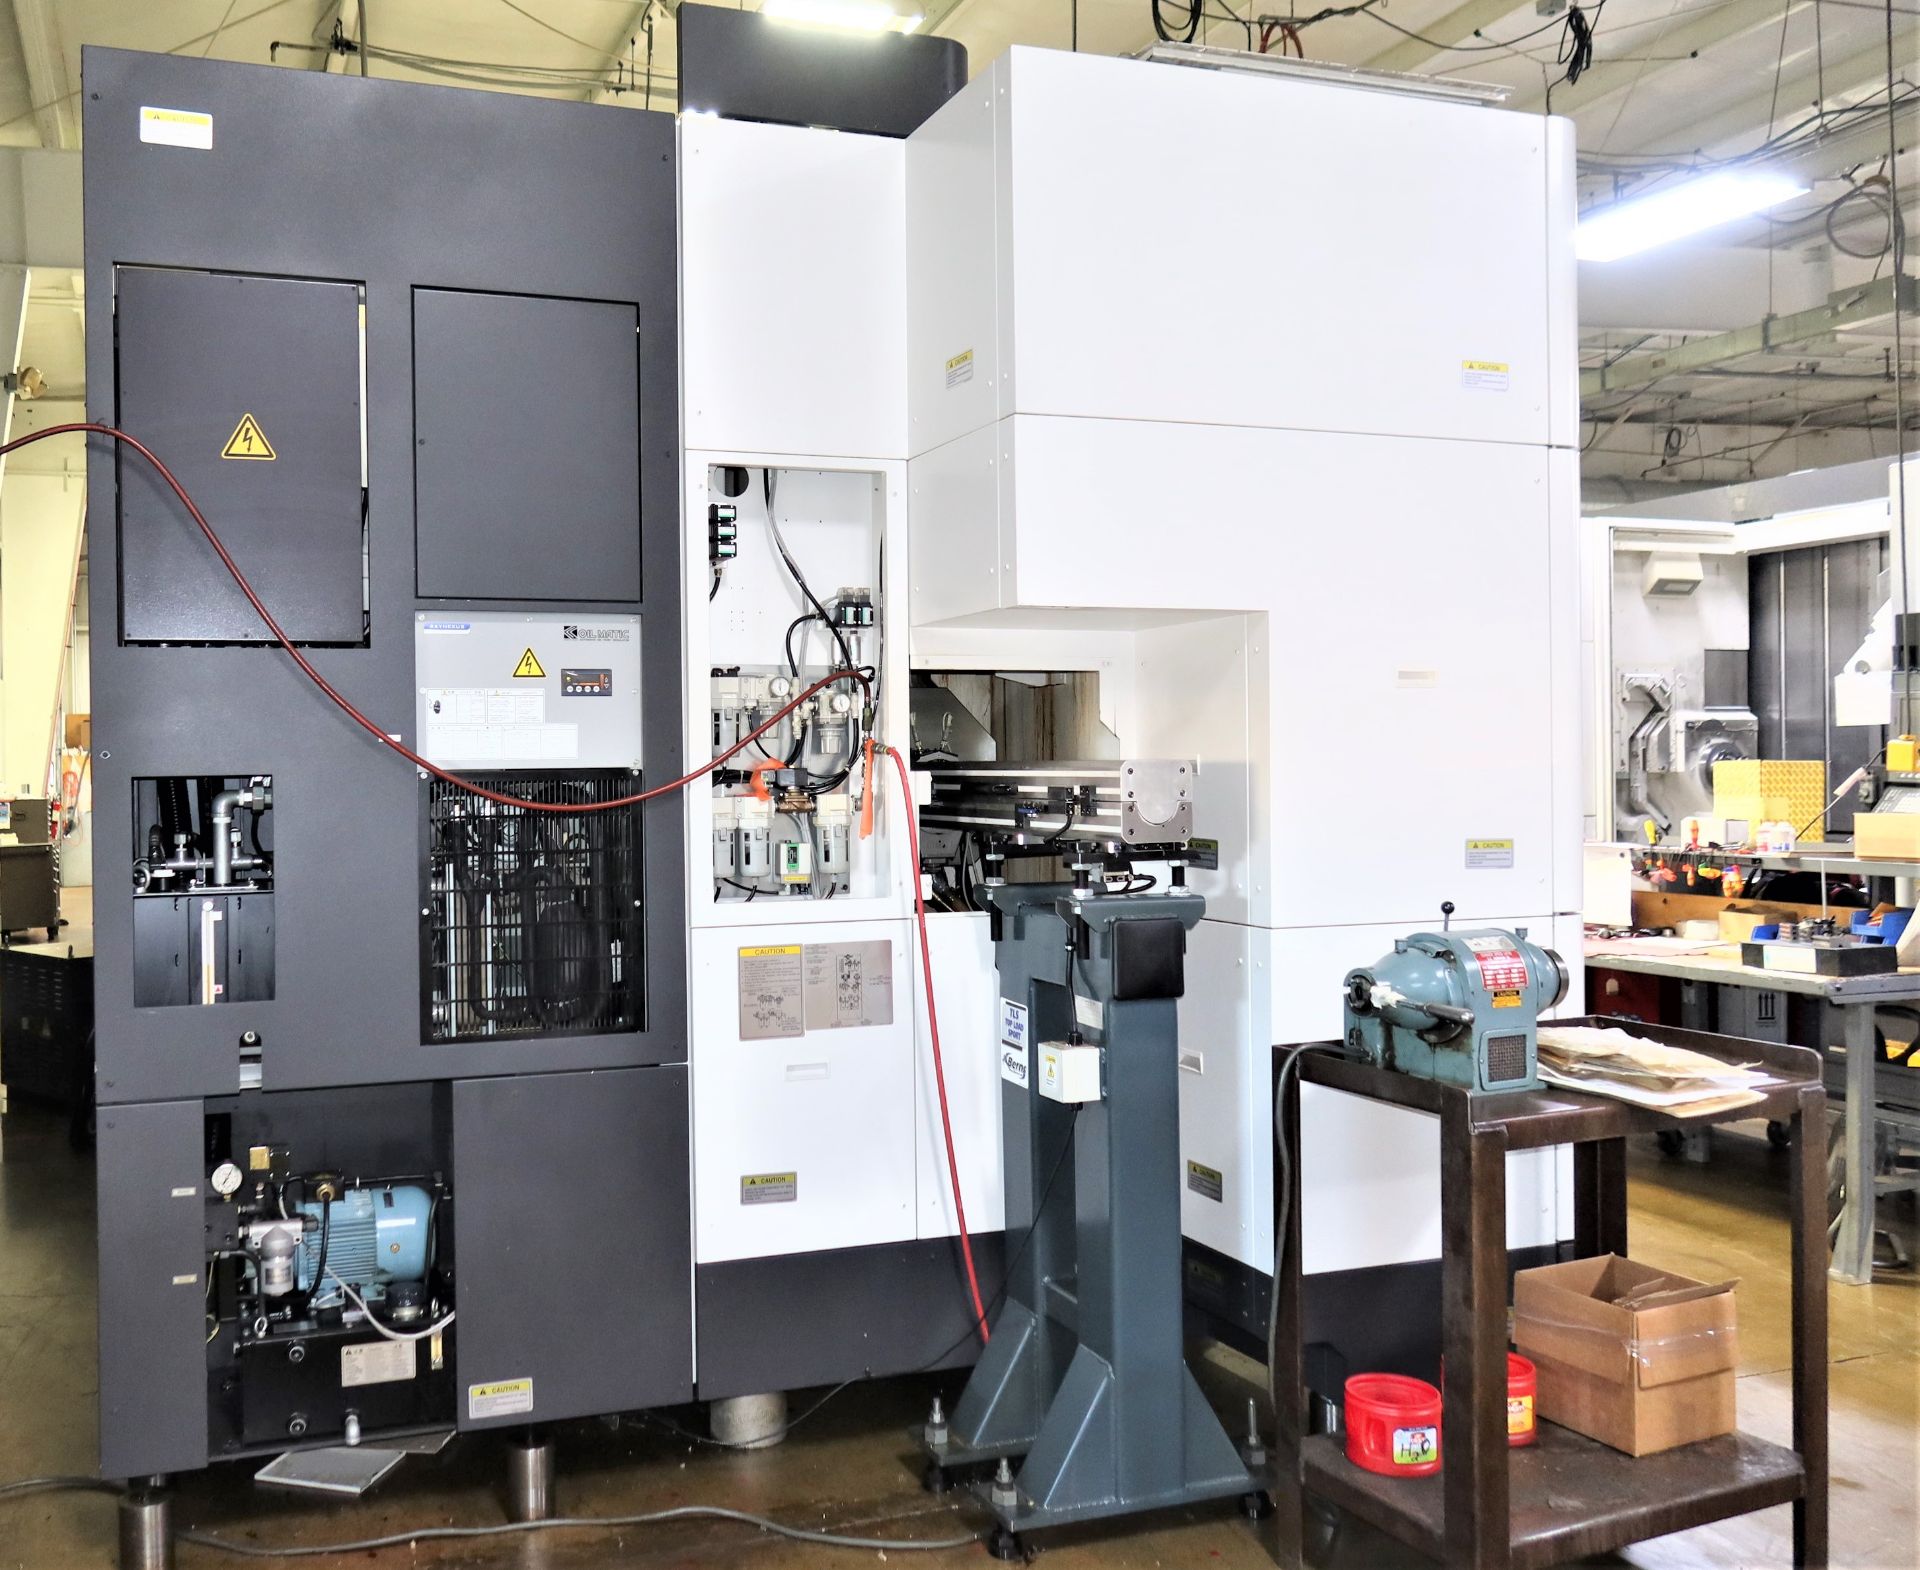 Okuma Multus U3000 5-Axis CNC Mill Lathe, New 2015 - Image 10 of 15